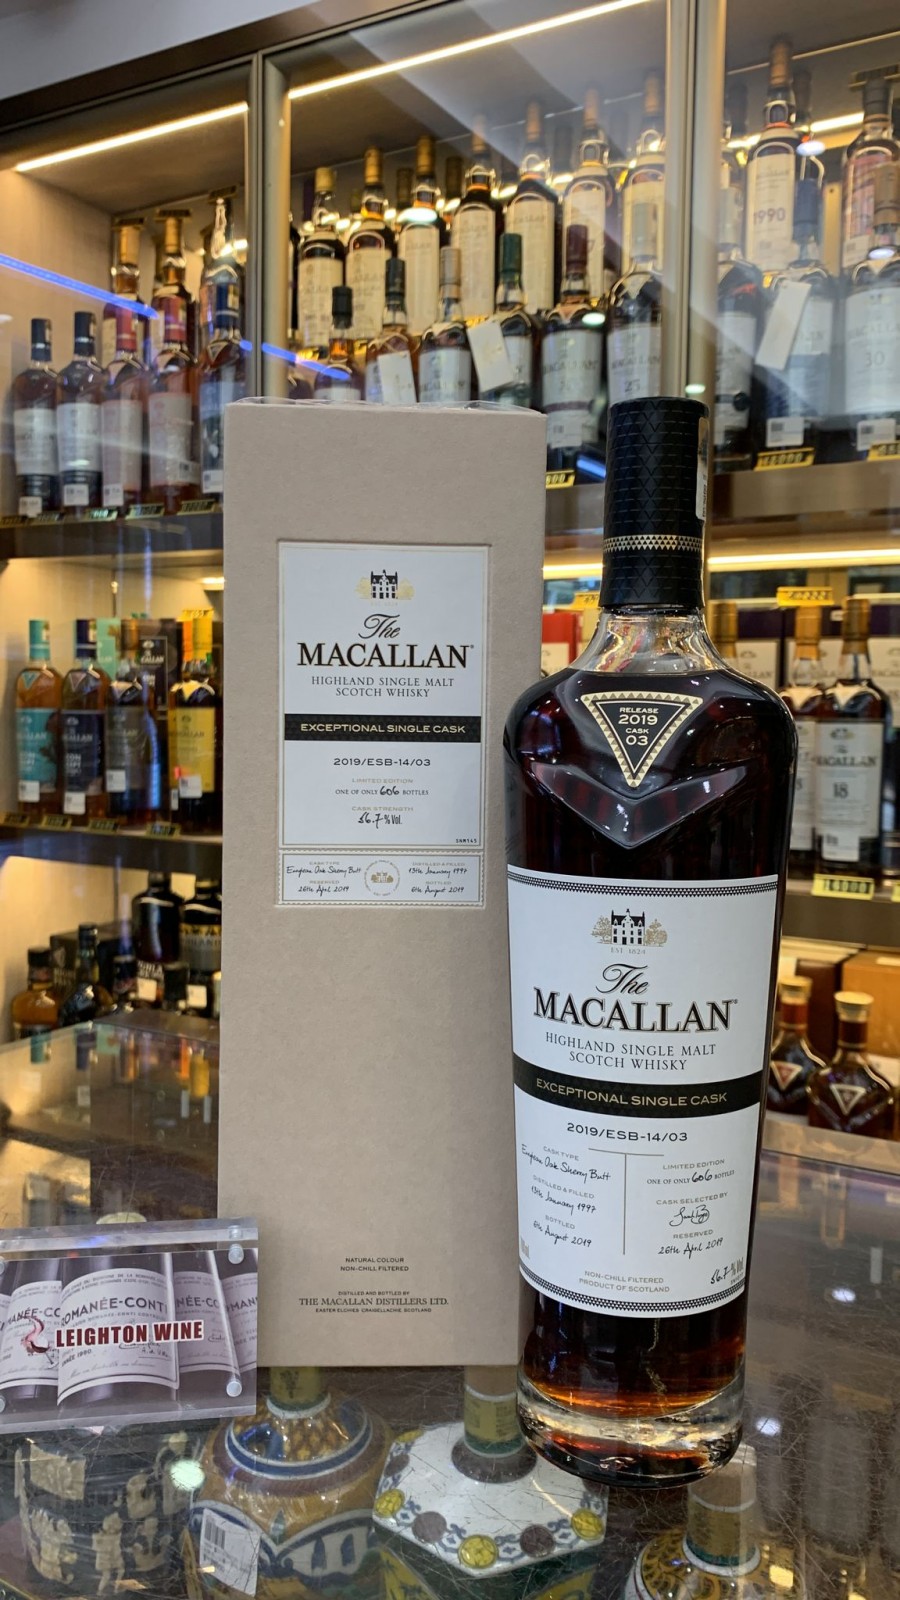 Macallan Exceptional Single Cask 2019/ESB – 14/03